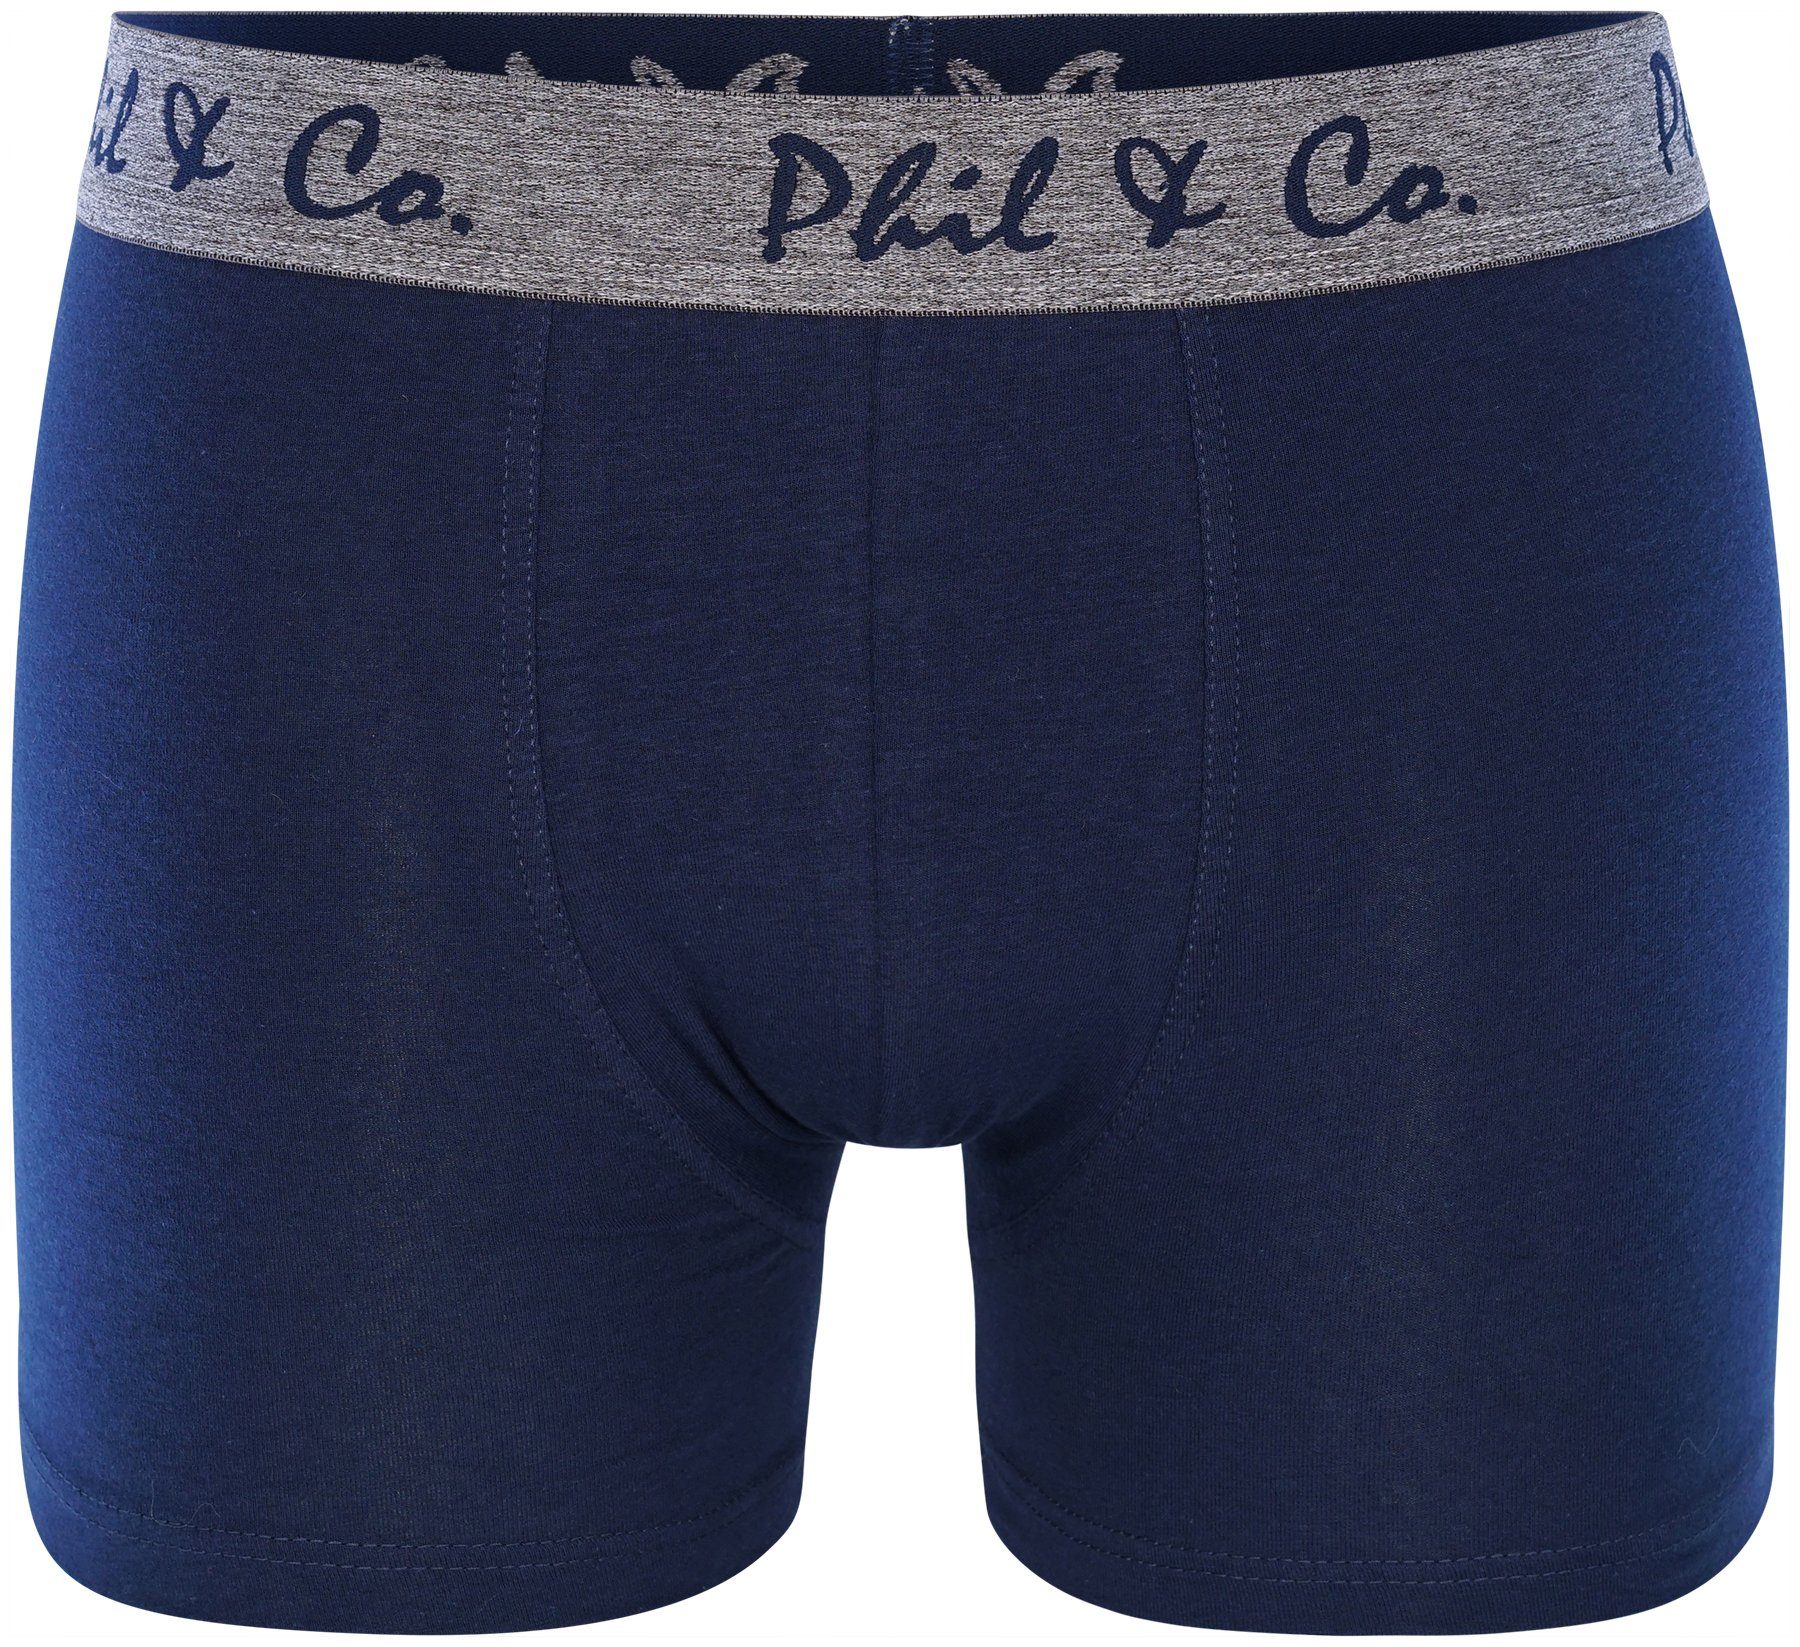 Phil & Retro (Navy/Grau) Pants 'Jersey' 2-Pack Retropants Co